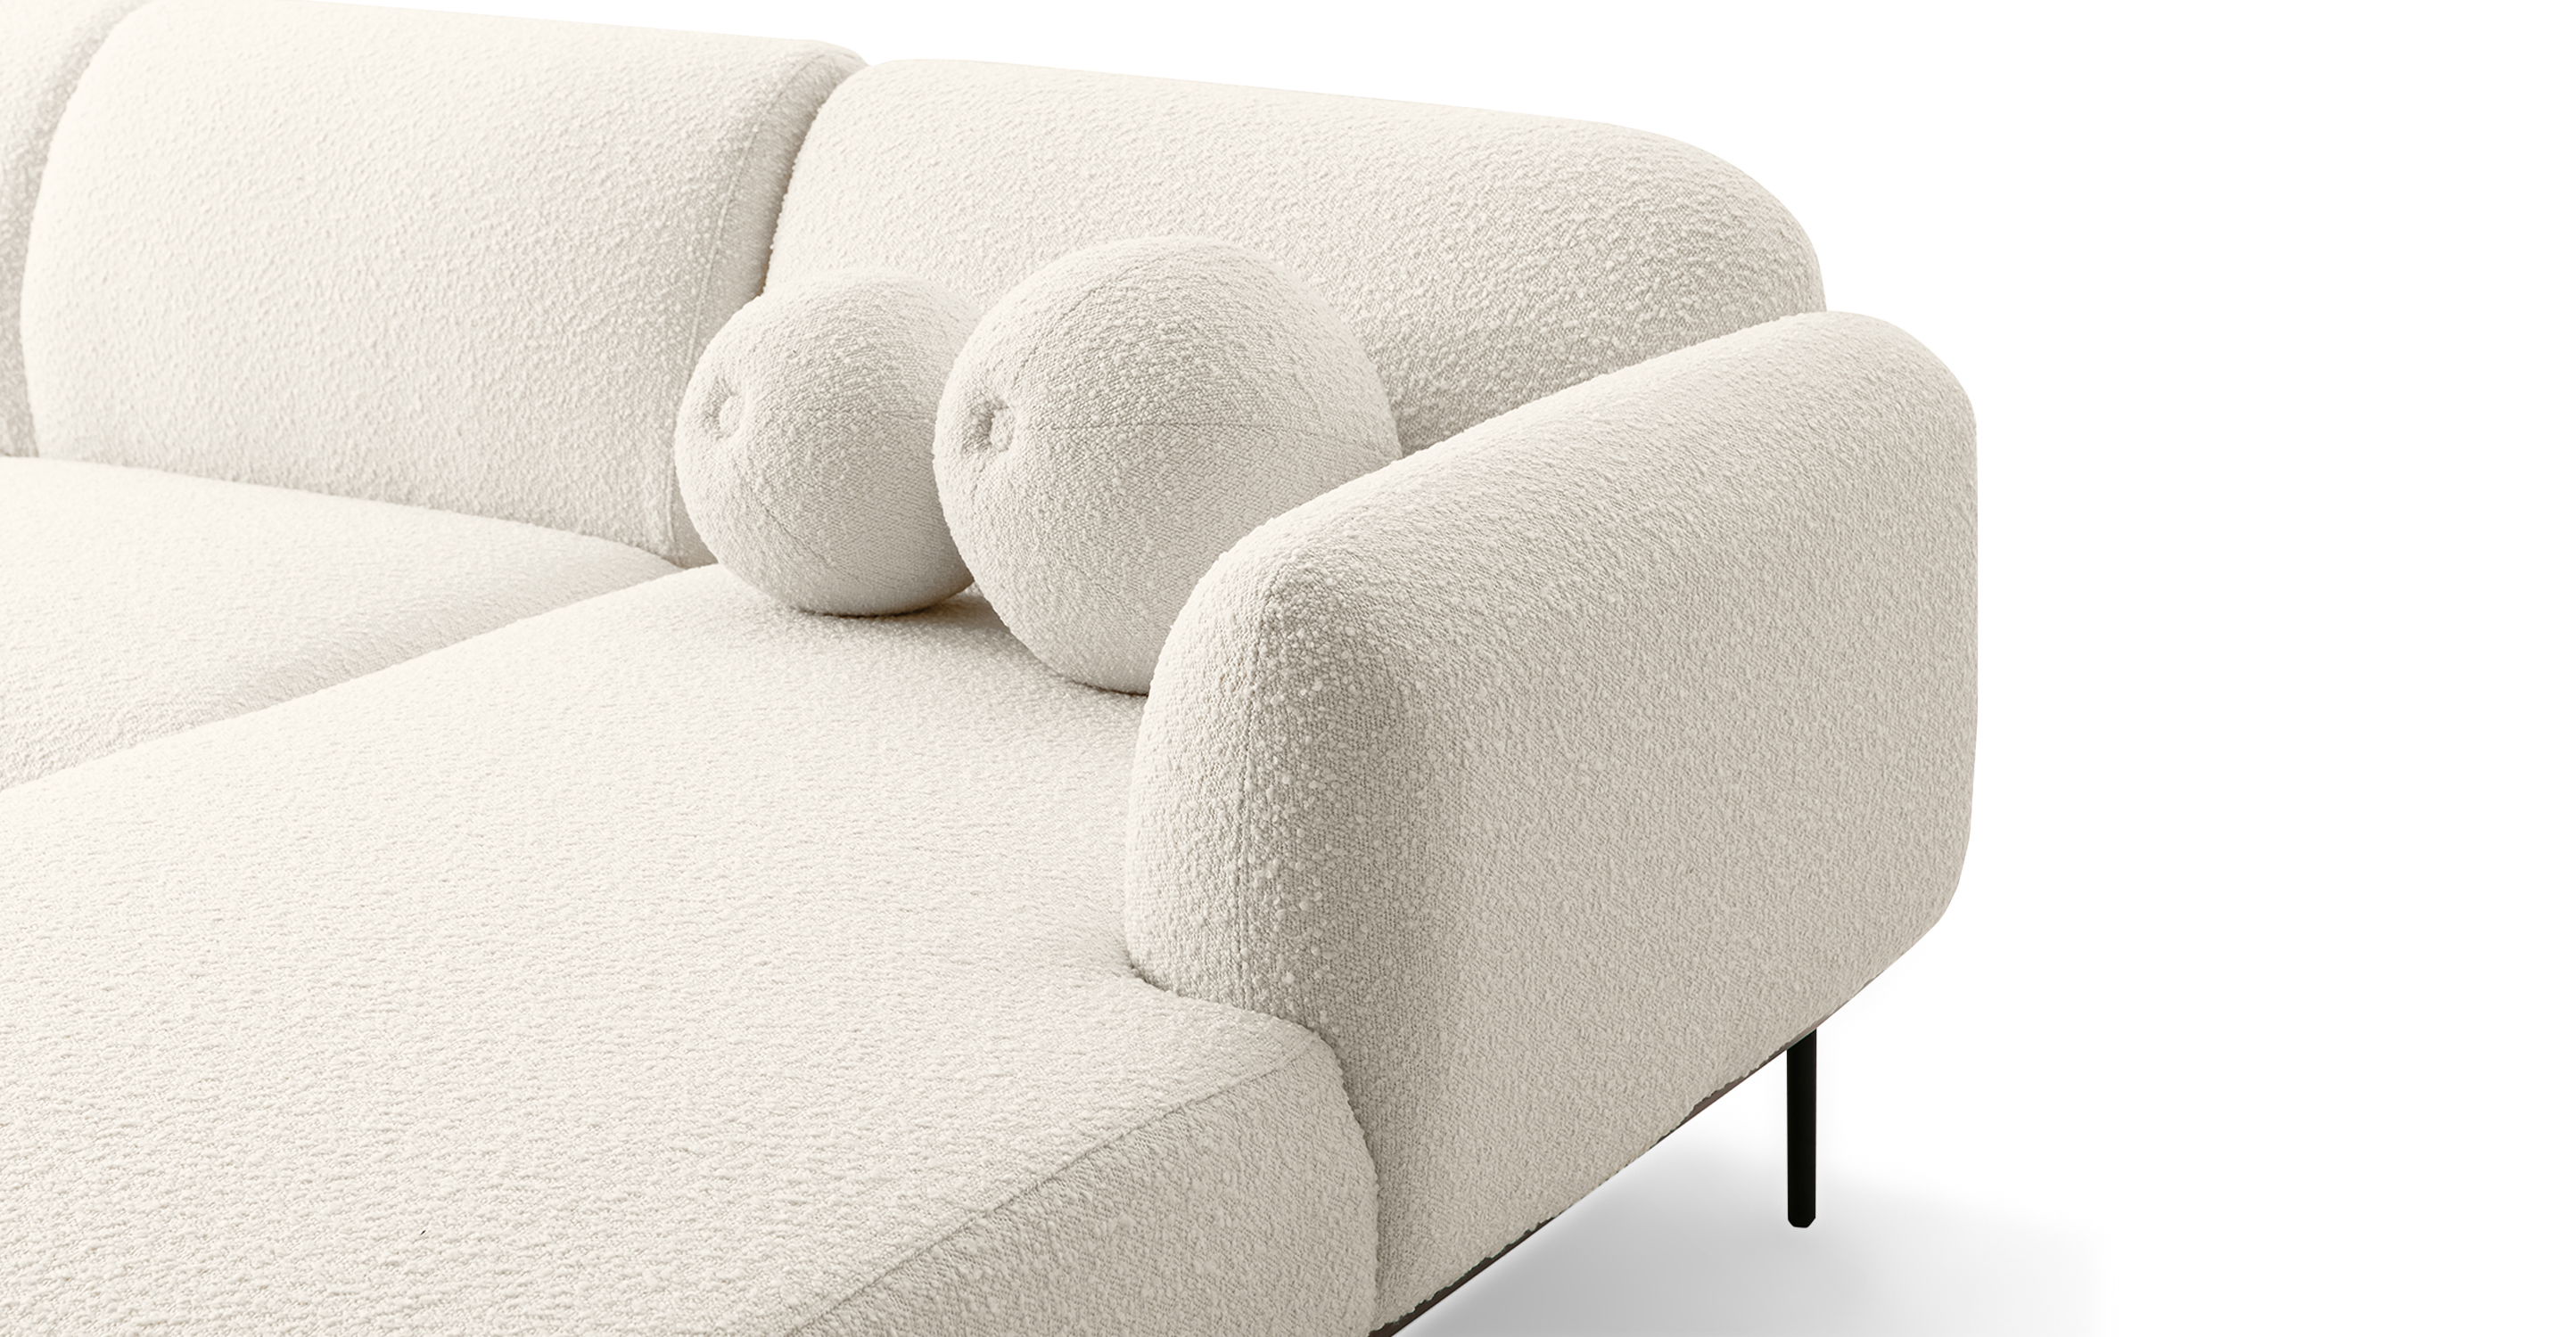 Puff 90 Fabric Sofa, Gris Boucle - Kardiel